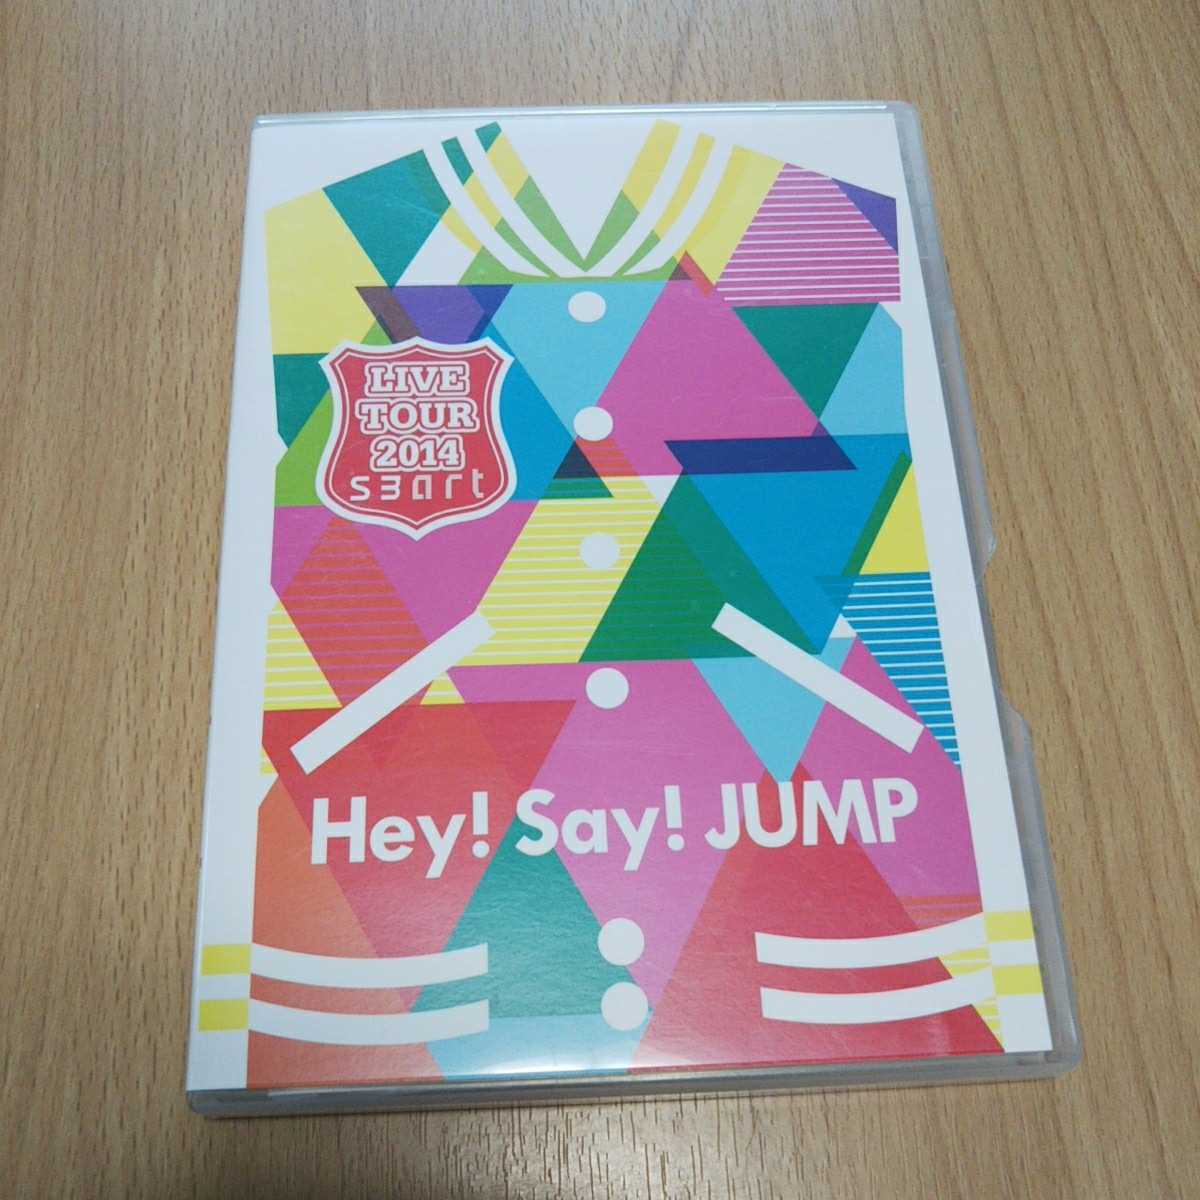 Hey Say 2014 DVD JUMP LIVE TOUR smart 通常盤 公式ストア JUMP